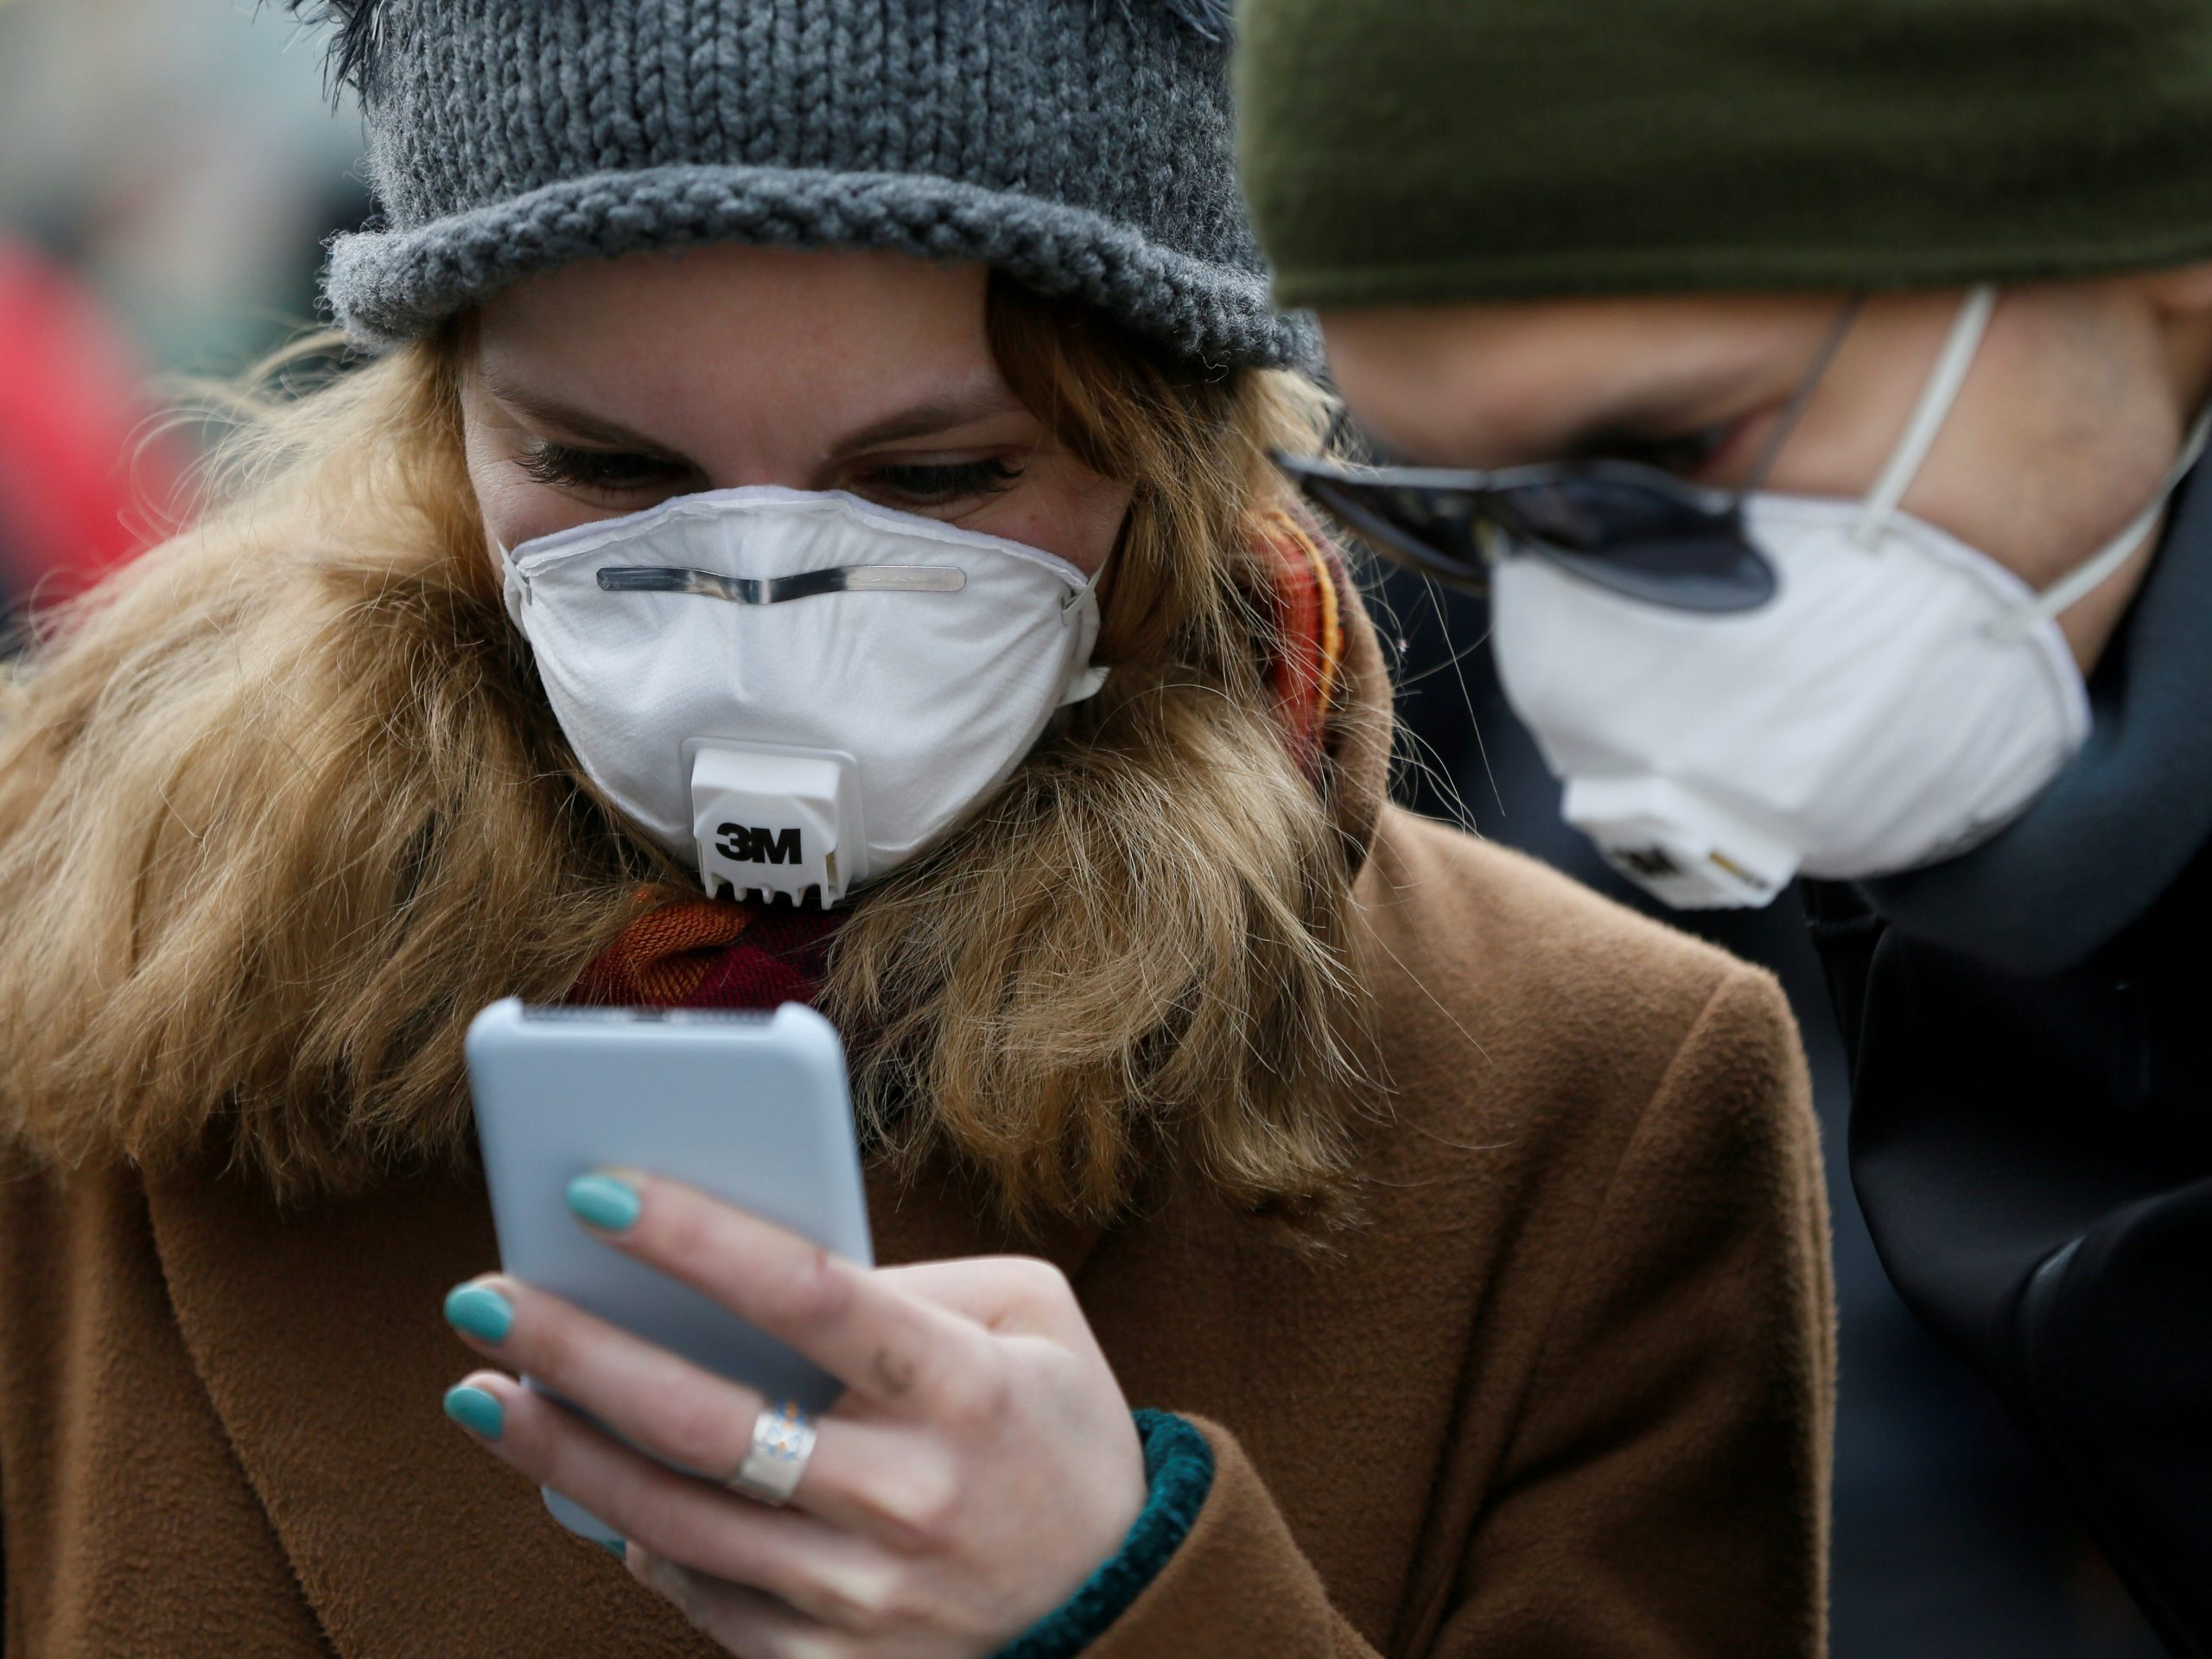 FILE PHOTO: People wearing protective face masks use a smartphone on a street amid coronavirus (COVID-19) concerns in Kiev, Ukraine March 17, 2020.  REUTERS/Valentyn Ogirenko